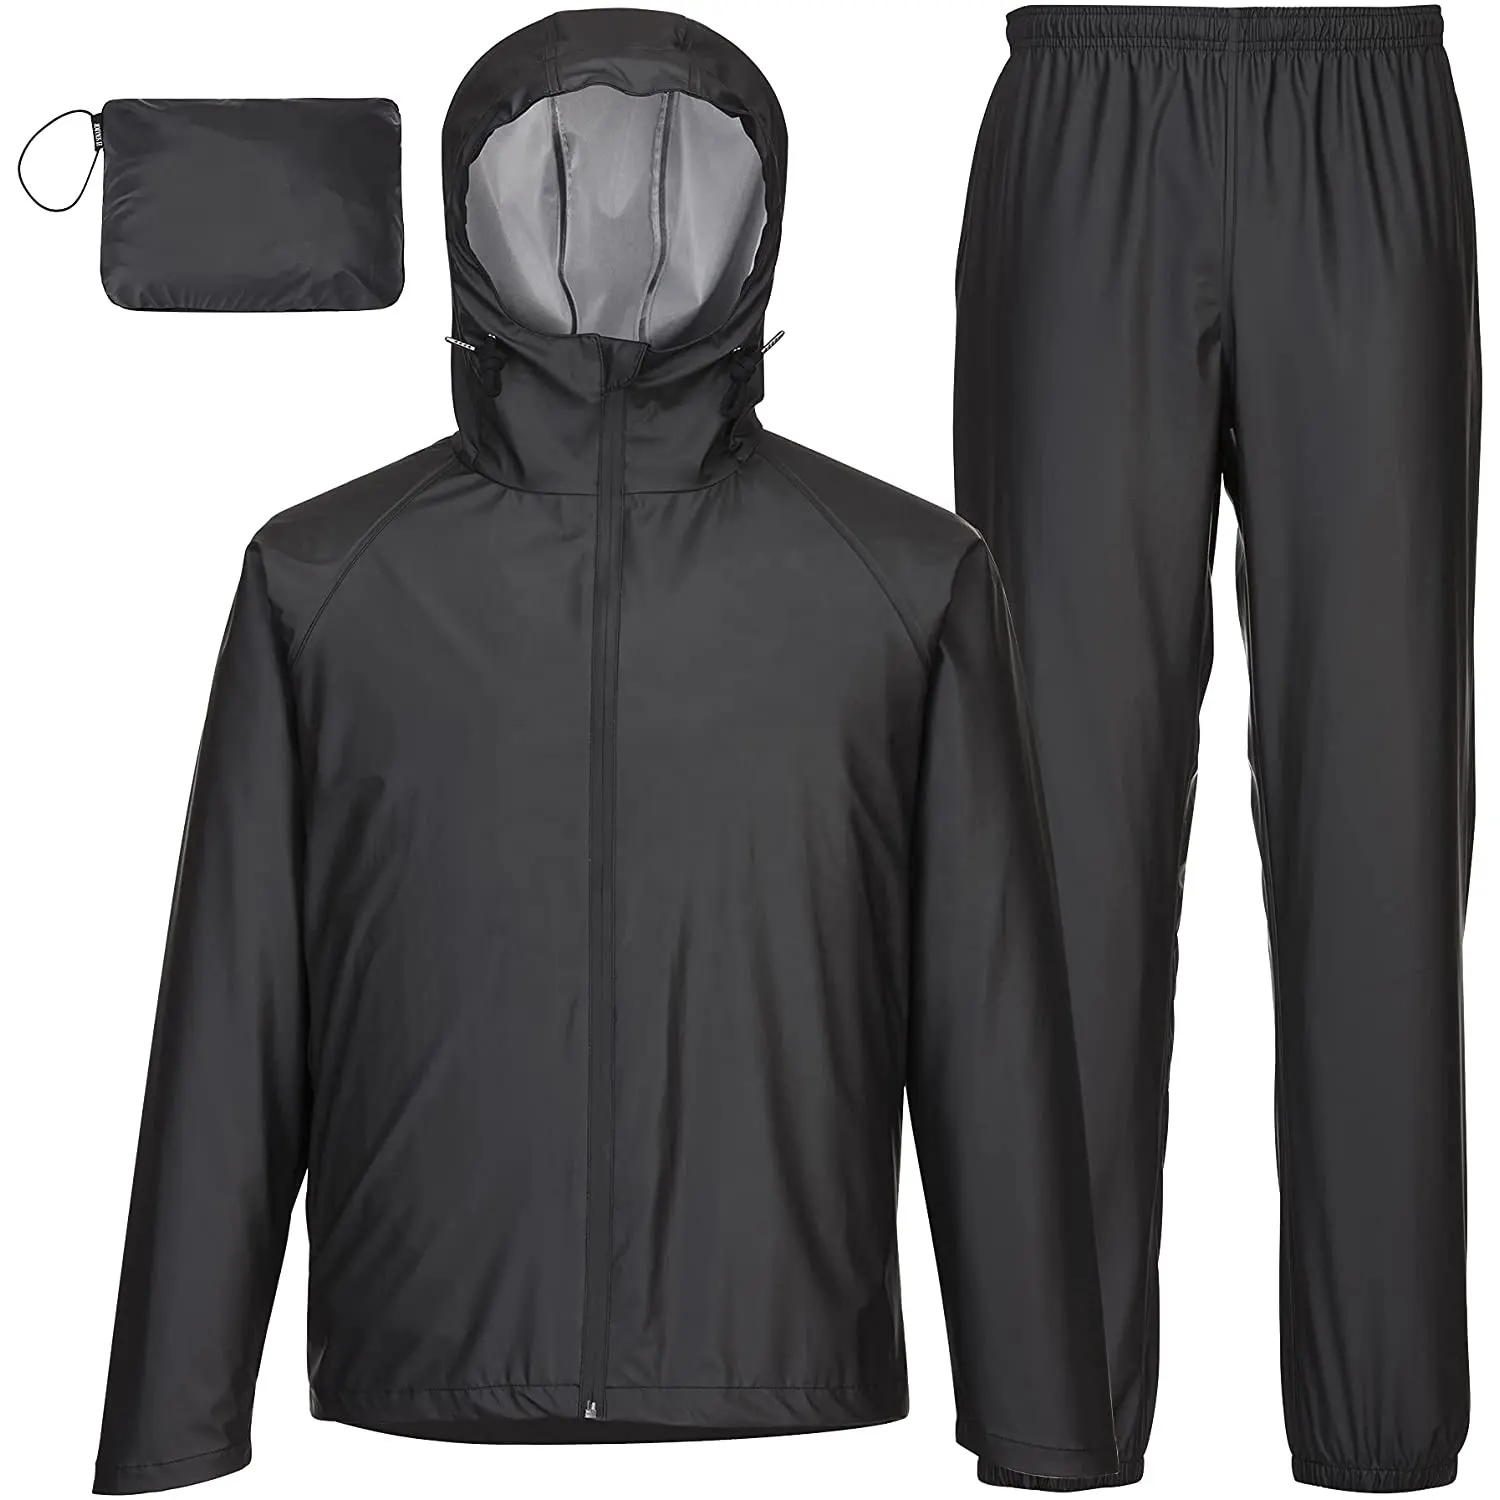 Classic Black Men's Rain Suits Waterproof Hooded Coats Jacket+Pants Rain Gear